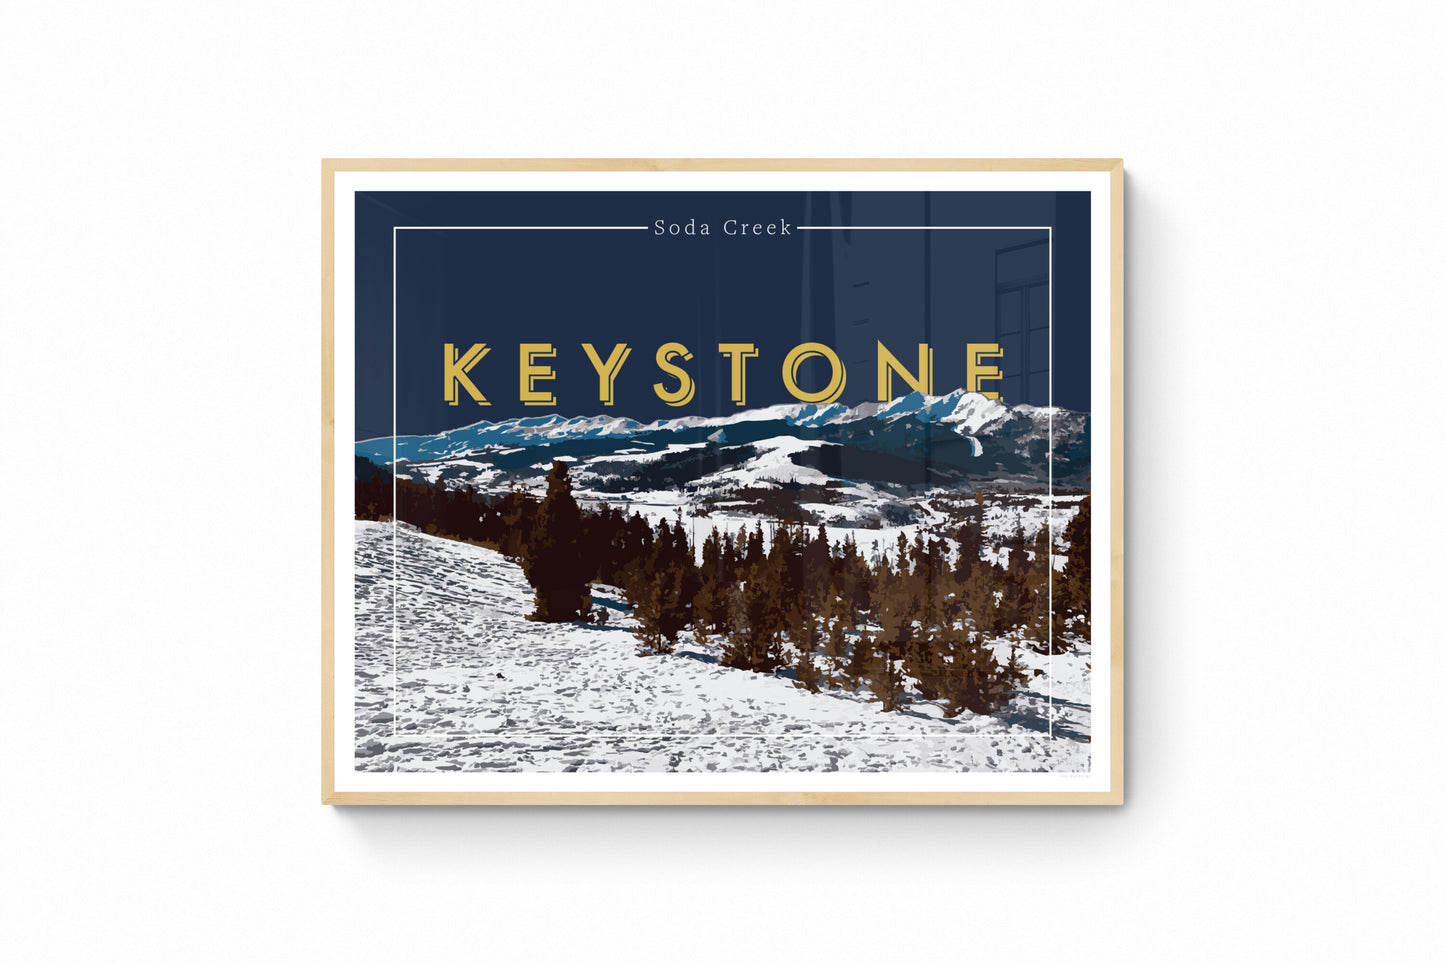 Keystone, Colorado - Soda Creek (Navy), Framed Wall Art, 11x14